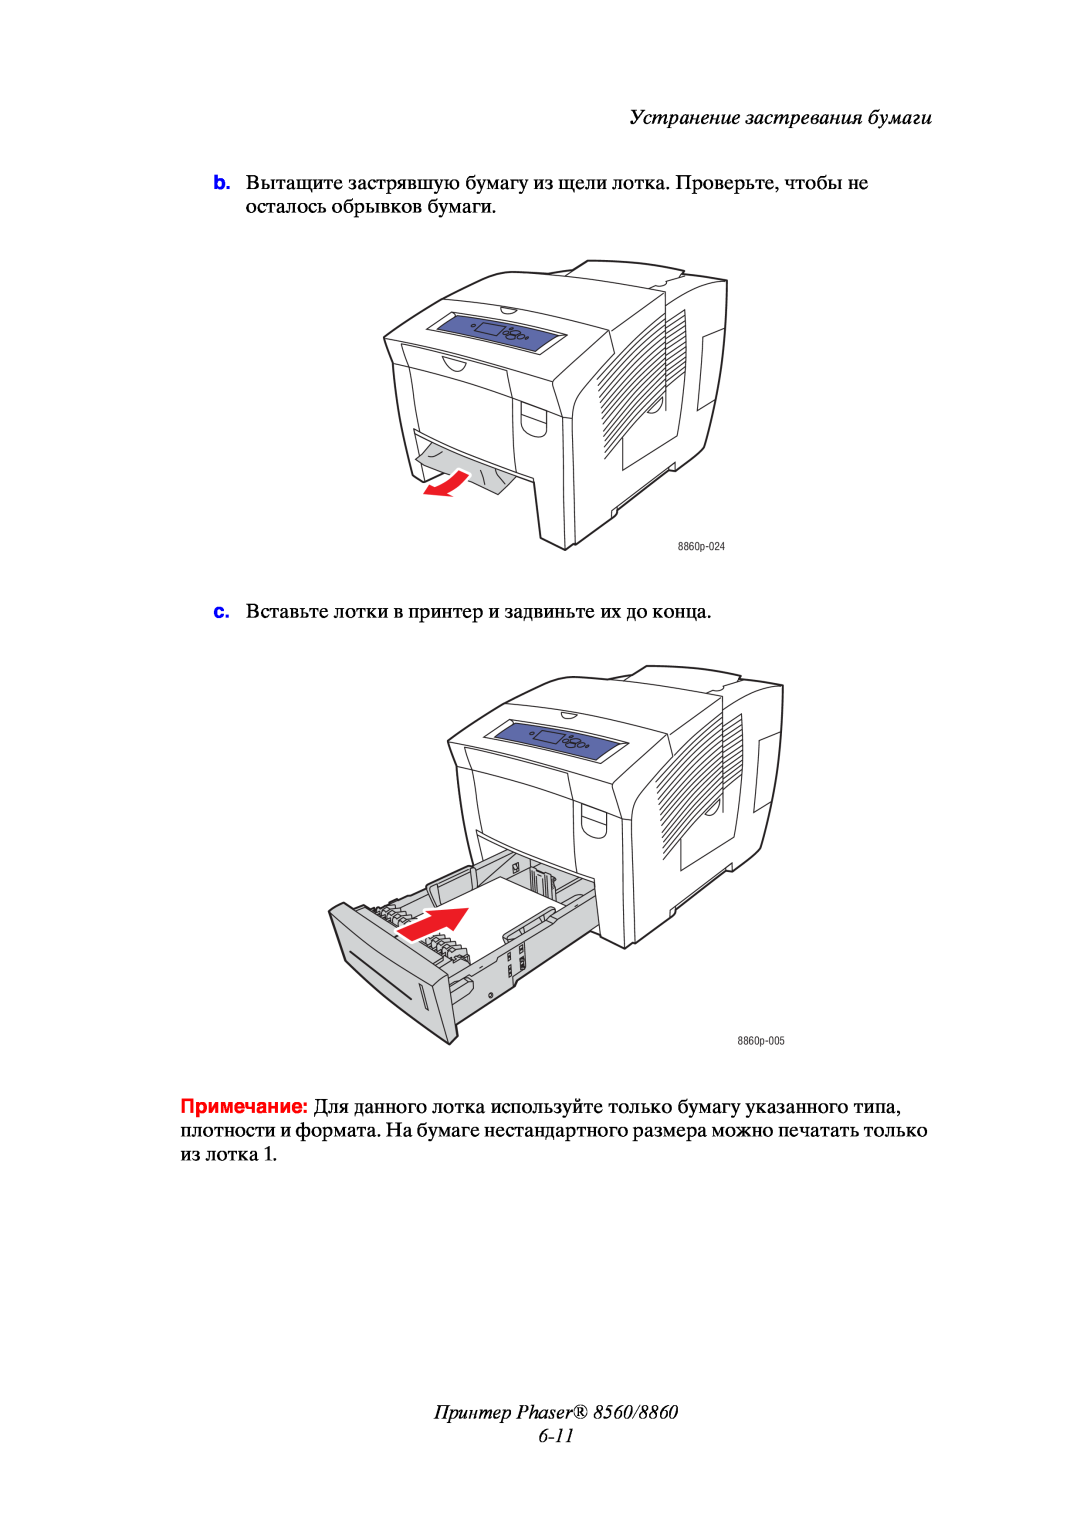 Xerox manual Принтер Phaser 8560/8860 6-11, Устранение застревания бумаги 